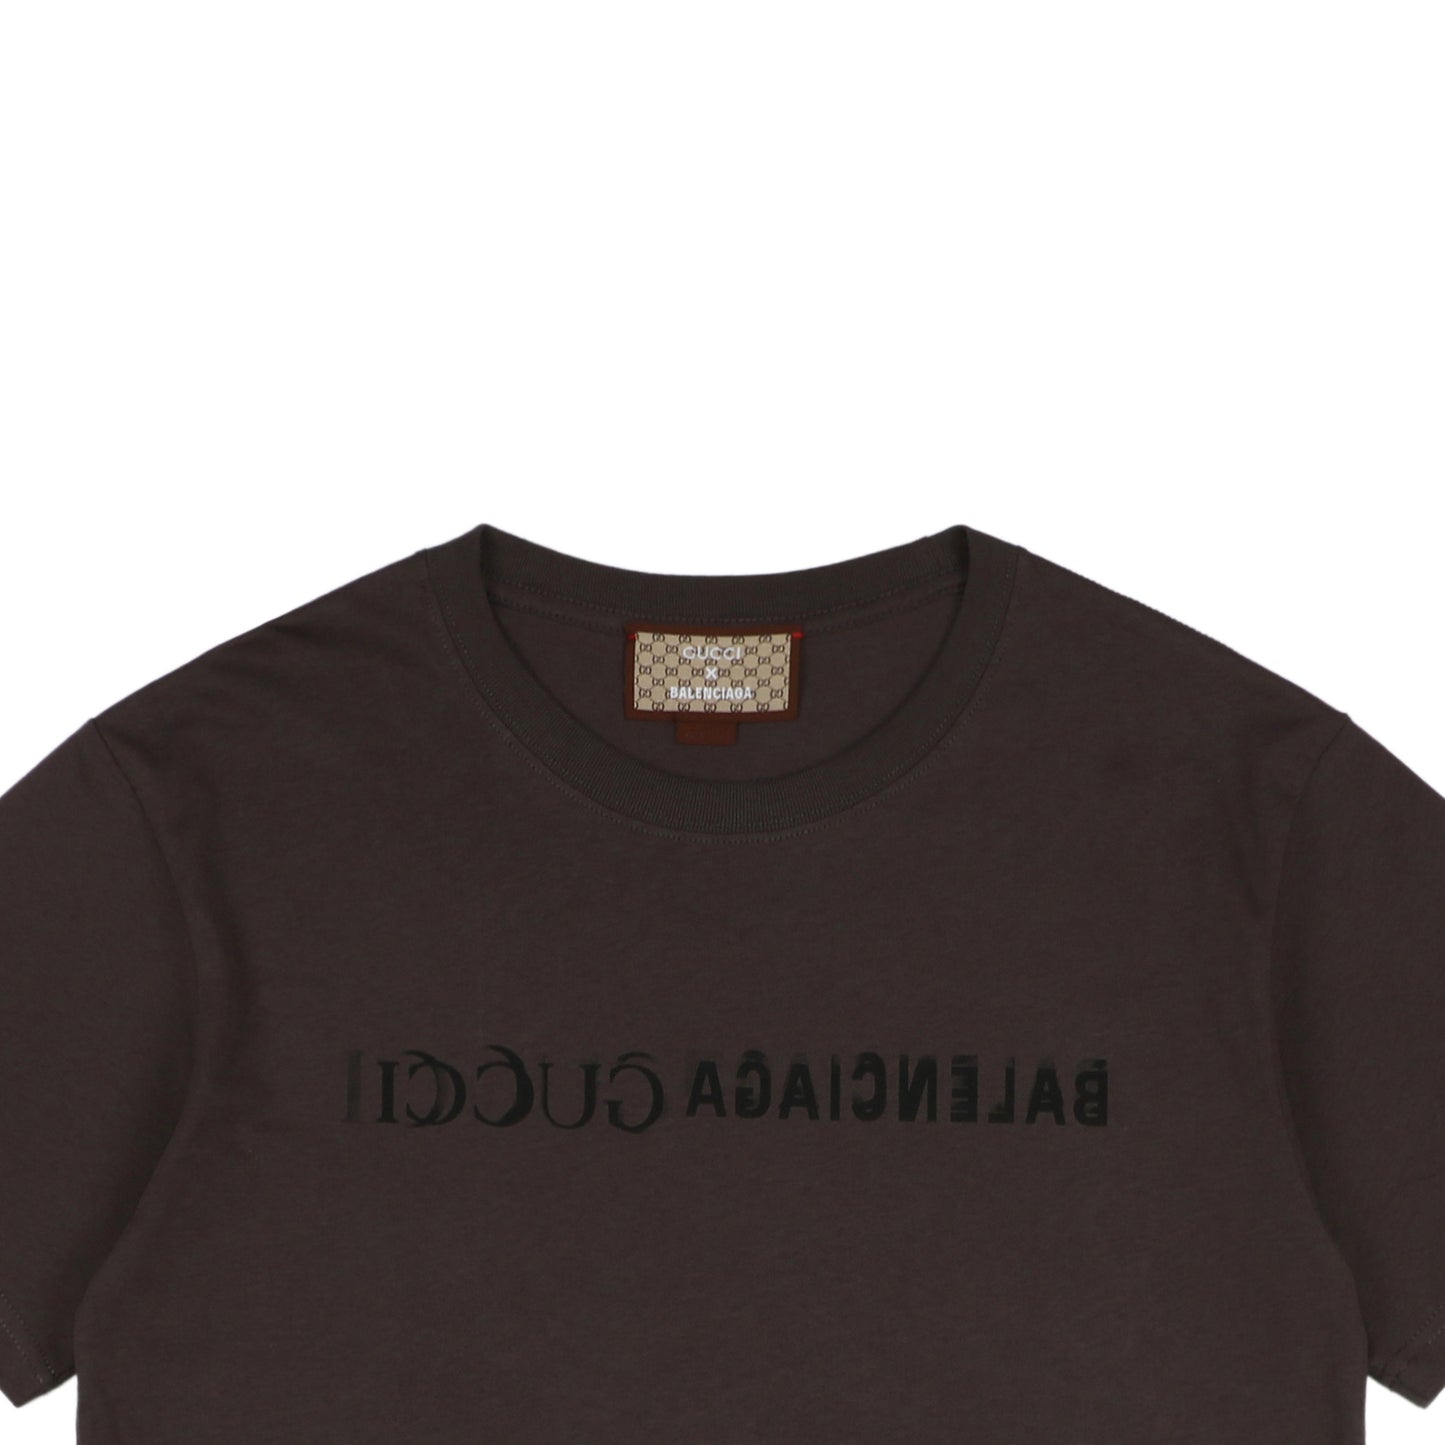 Gucc1 X Balenci Brown T-Shirt